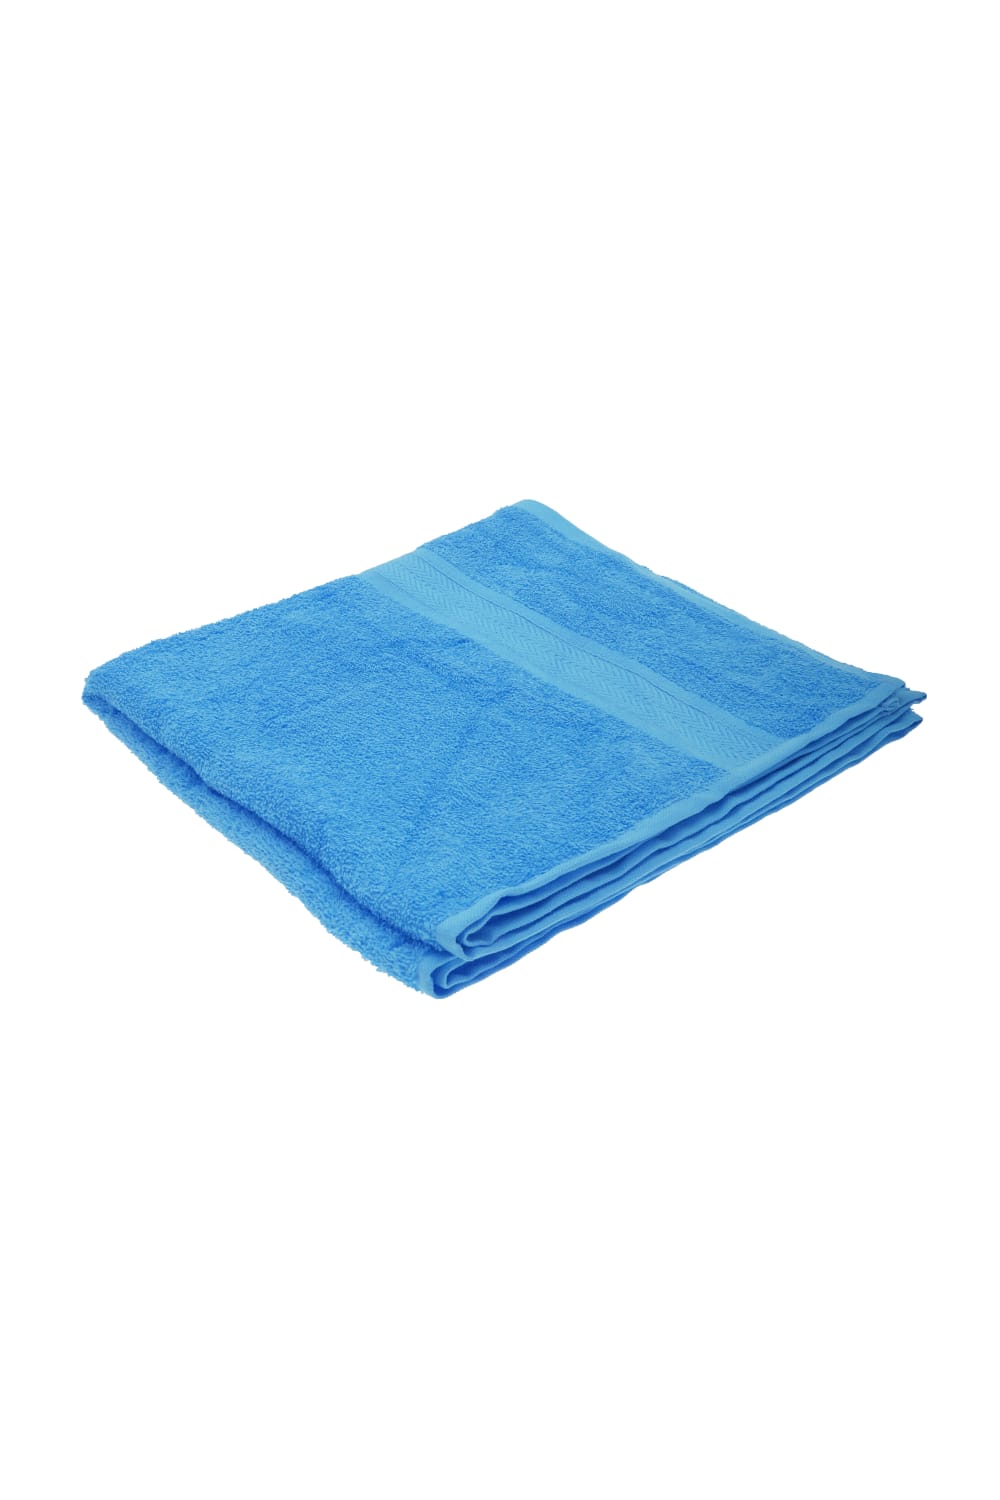 Jassz Plain Bath Towel  (Pack of 2) (Aqua) (One Size)